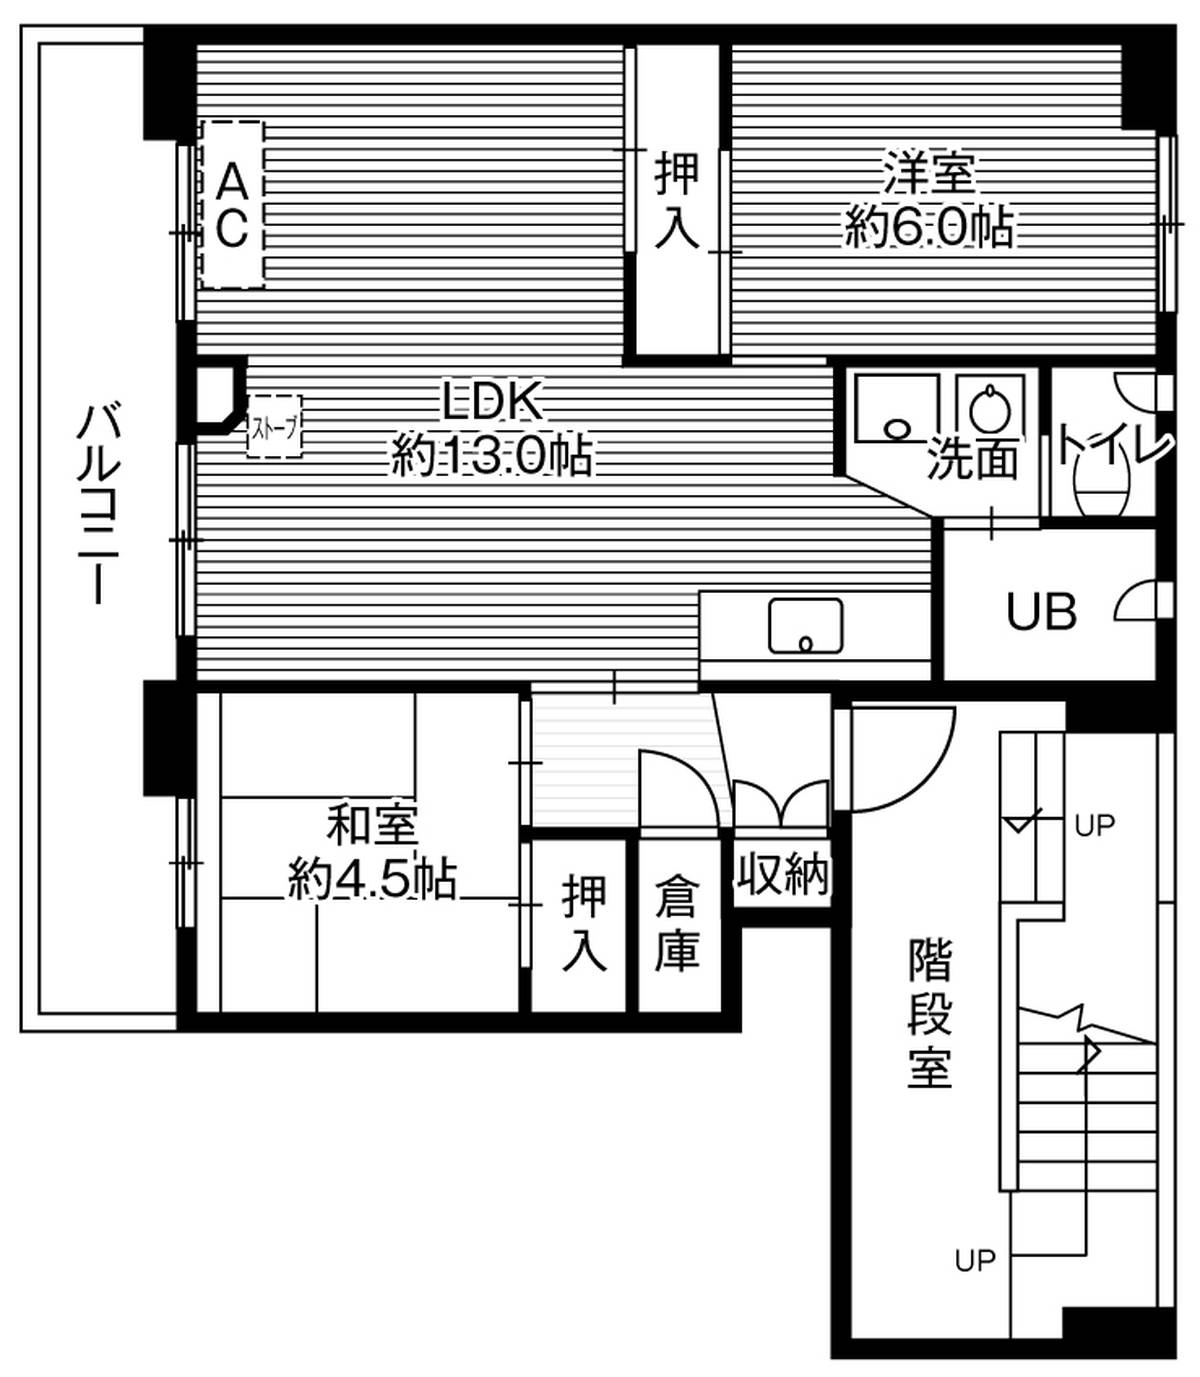 3DK floorplan of Village House Osatsu in Chitose-shi